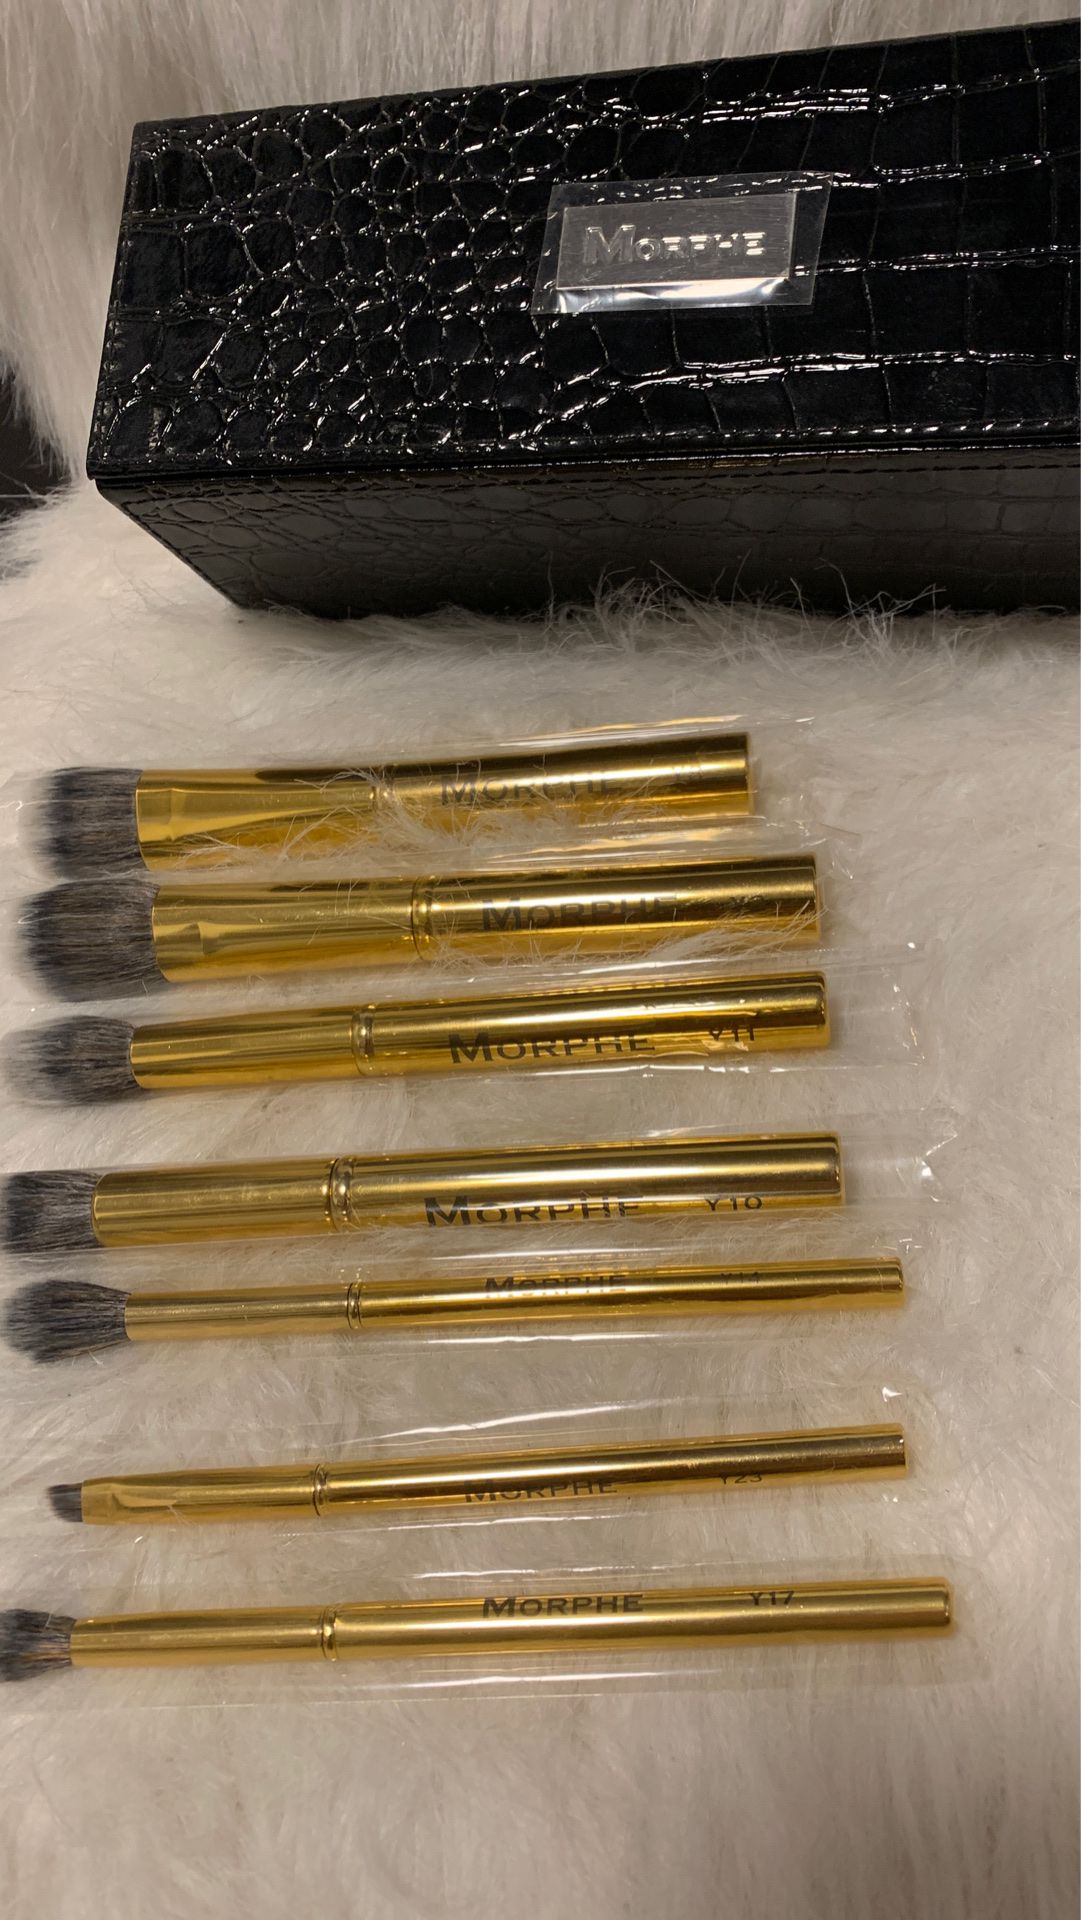 7 Morphe makeup brushes